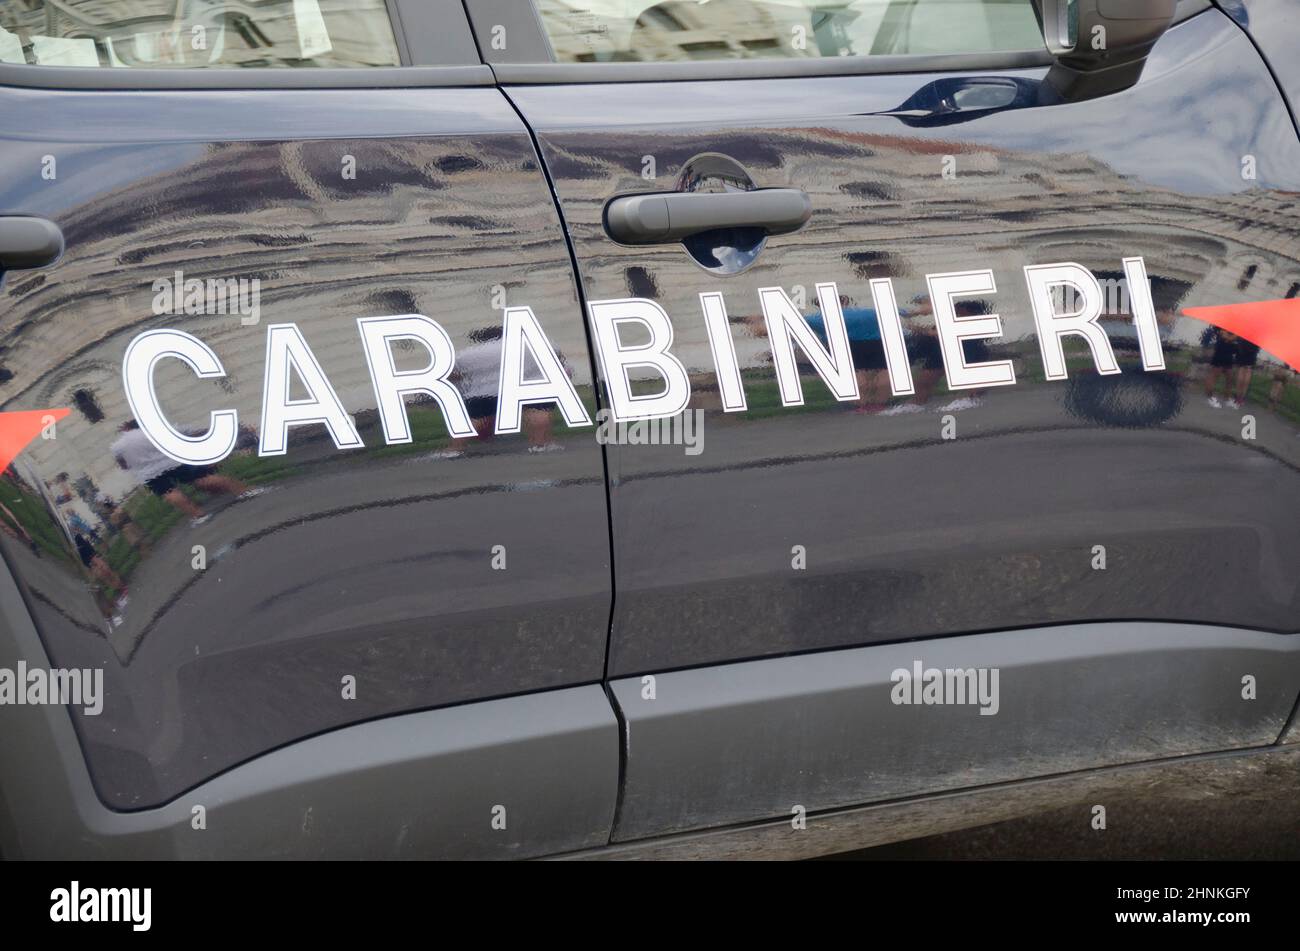 a carabinieri vehicle Stock Photo